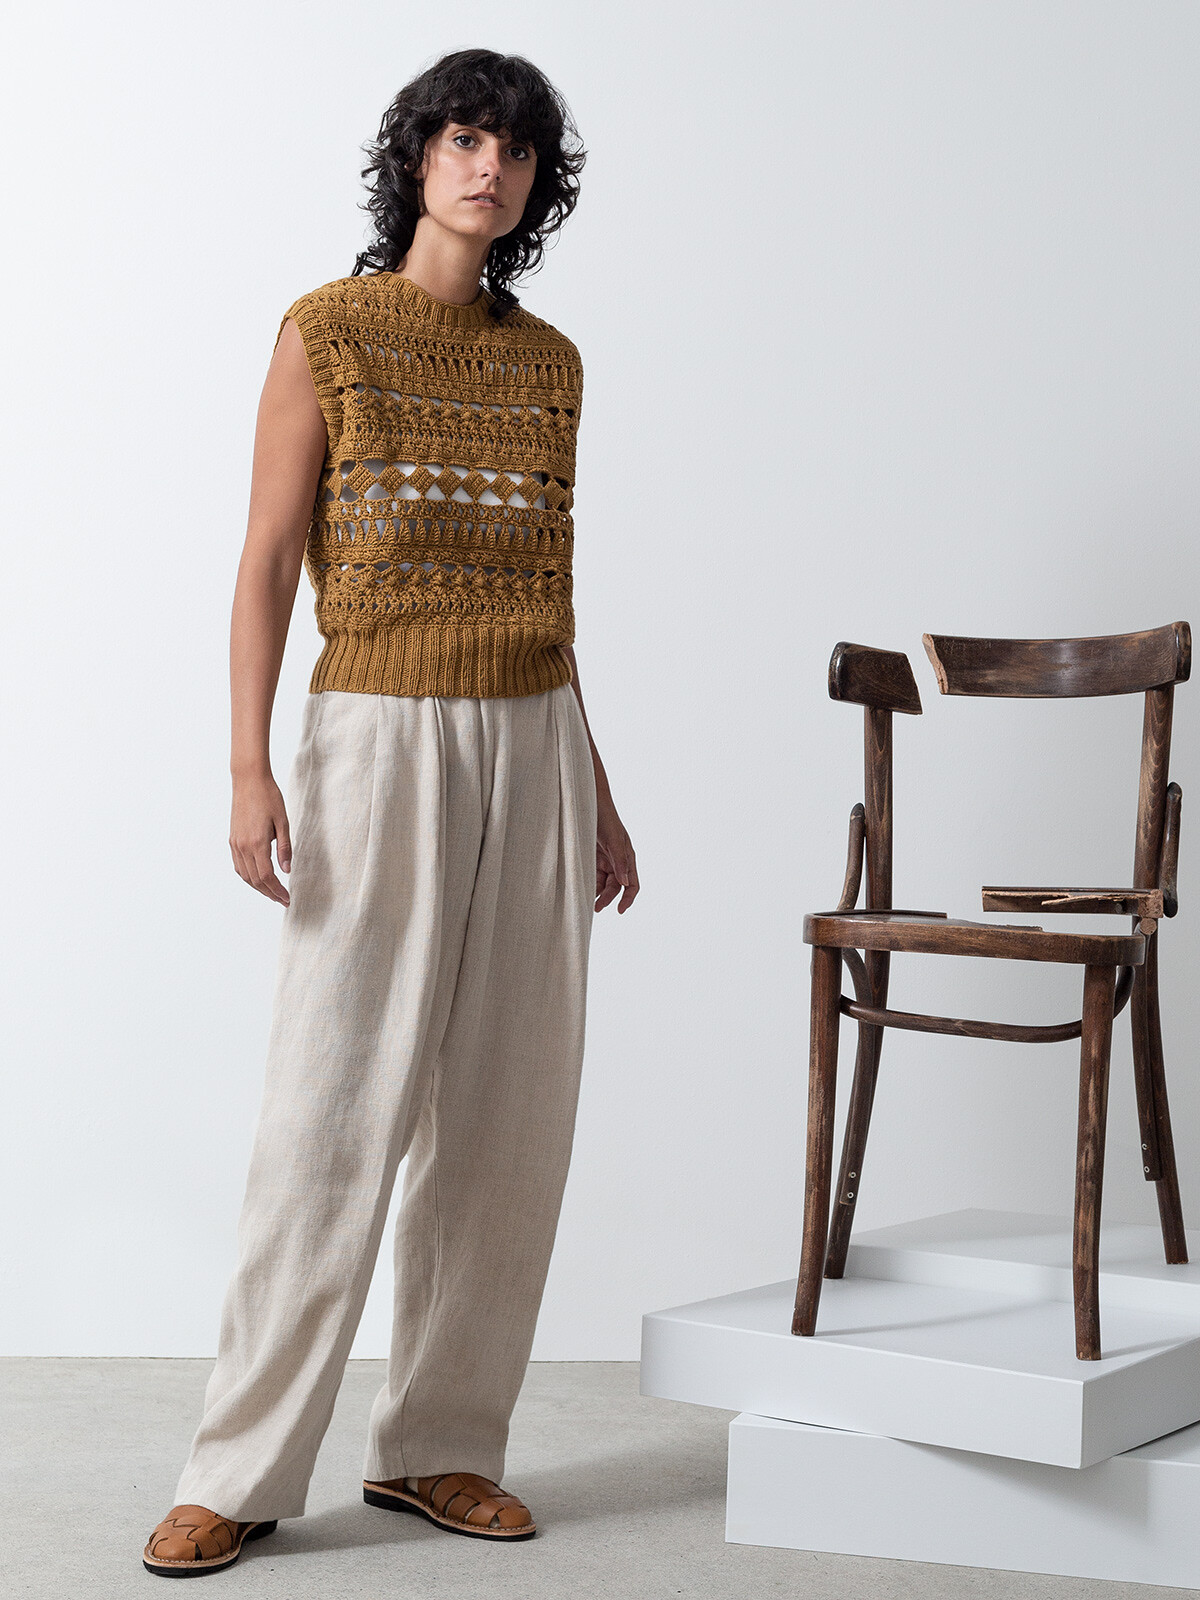 Crochet vest Image